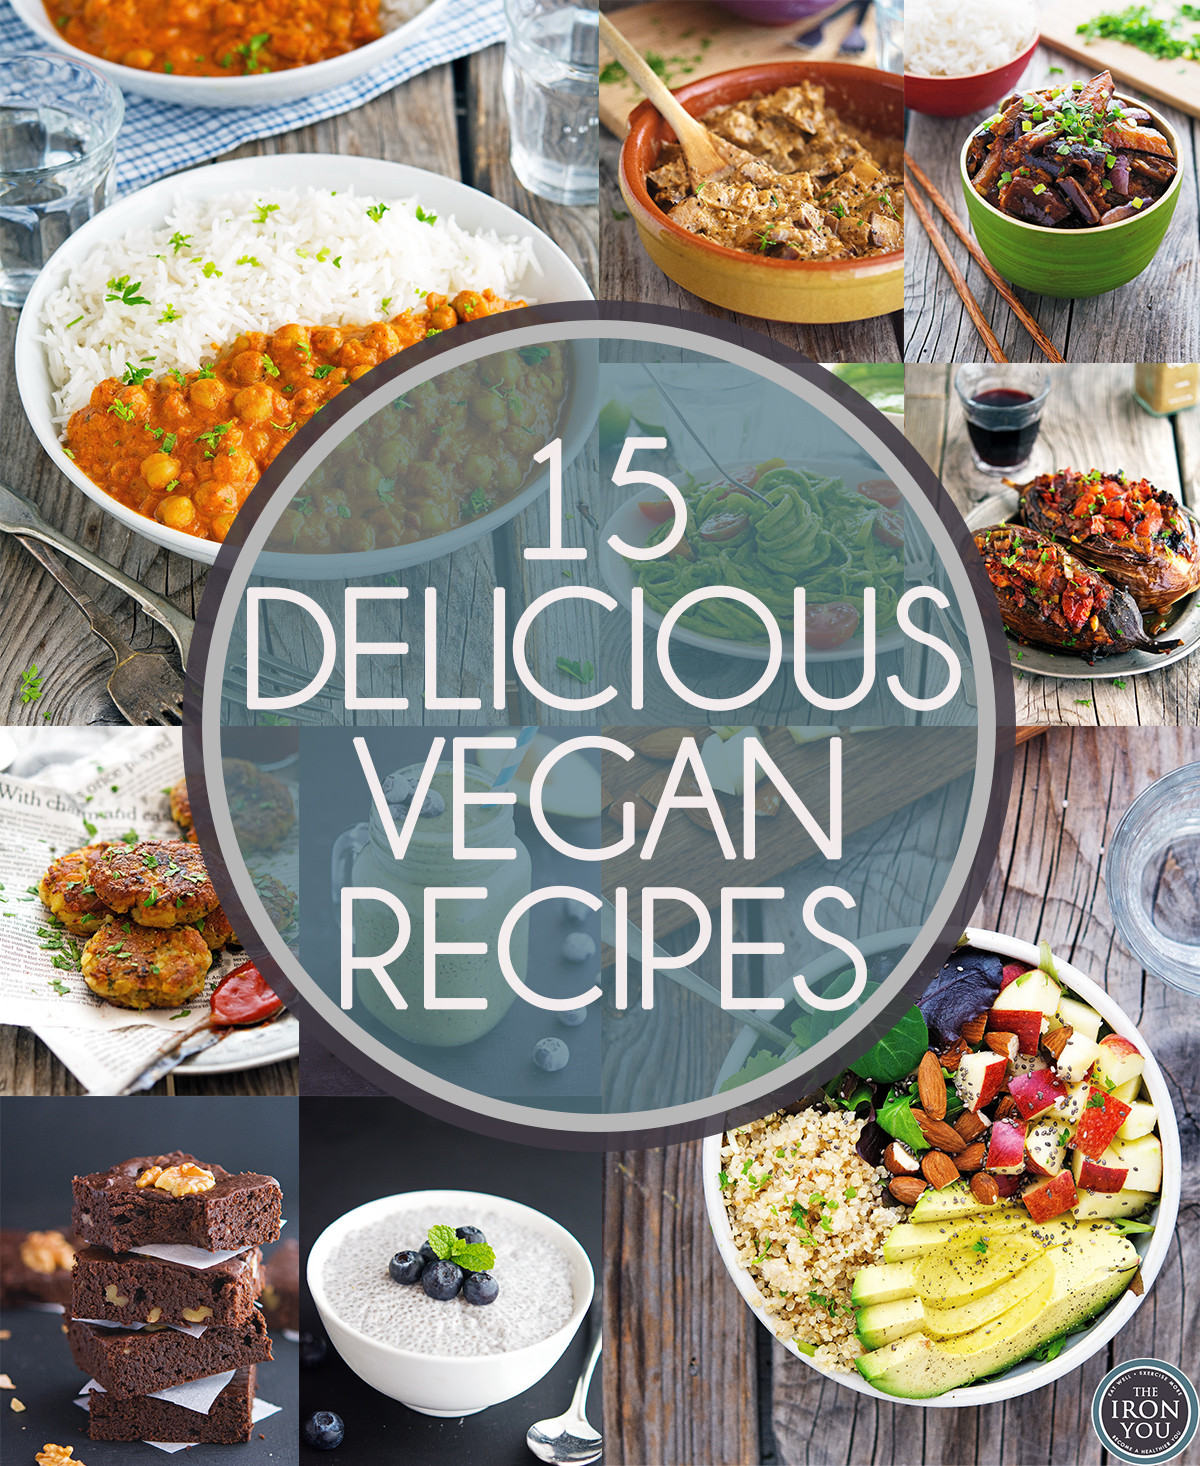 Delicious Healthy Vegetarian Recipes
 The Iron You 15 Delicious Vegan Recipes